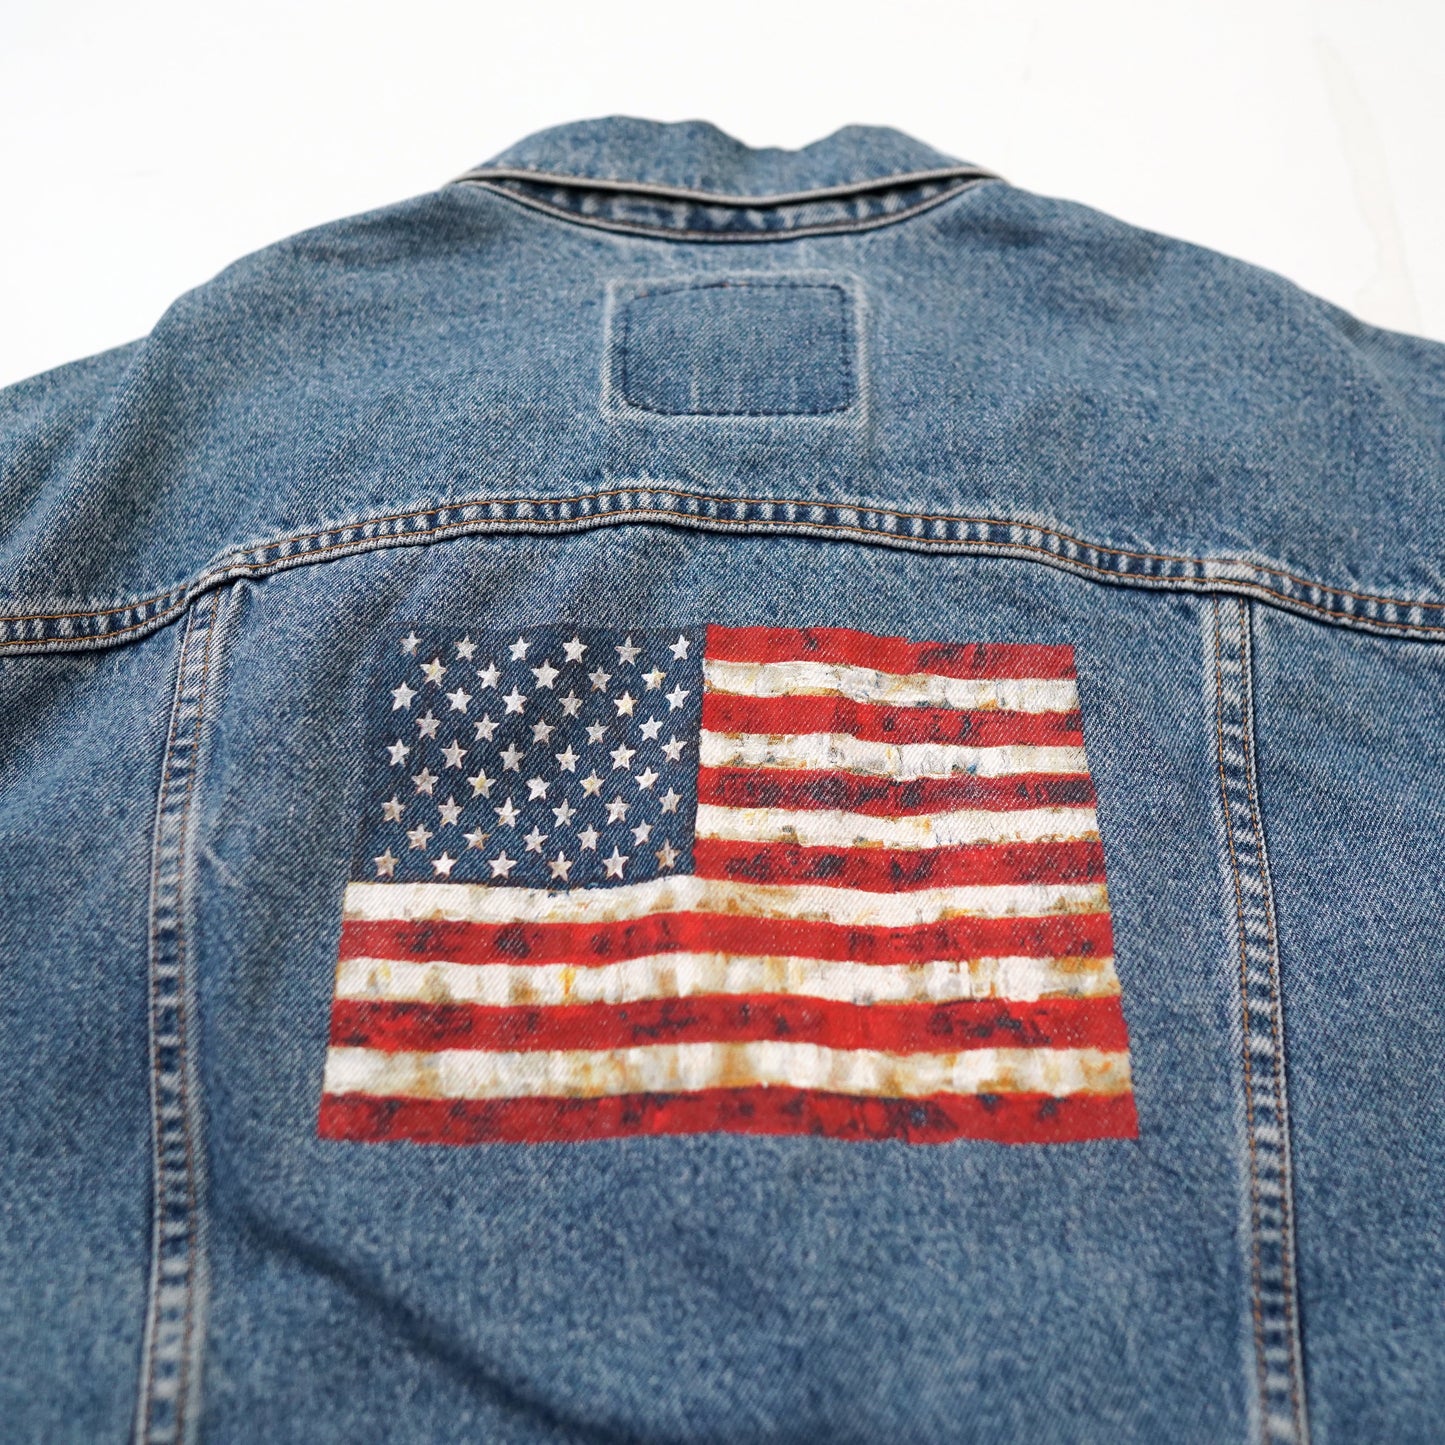 Levi's USA denim jacket